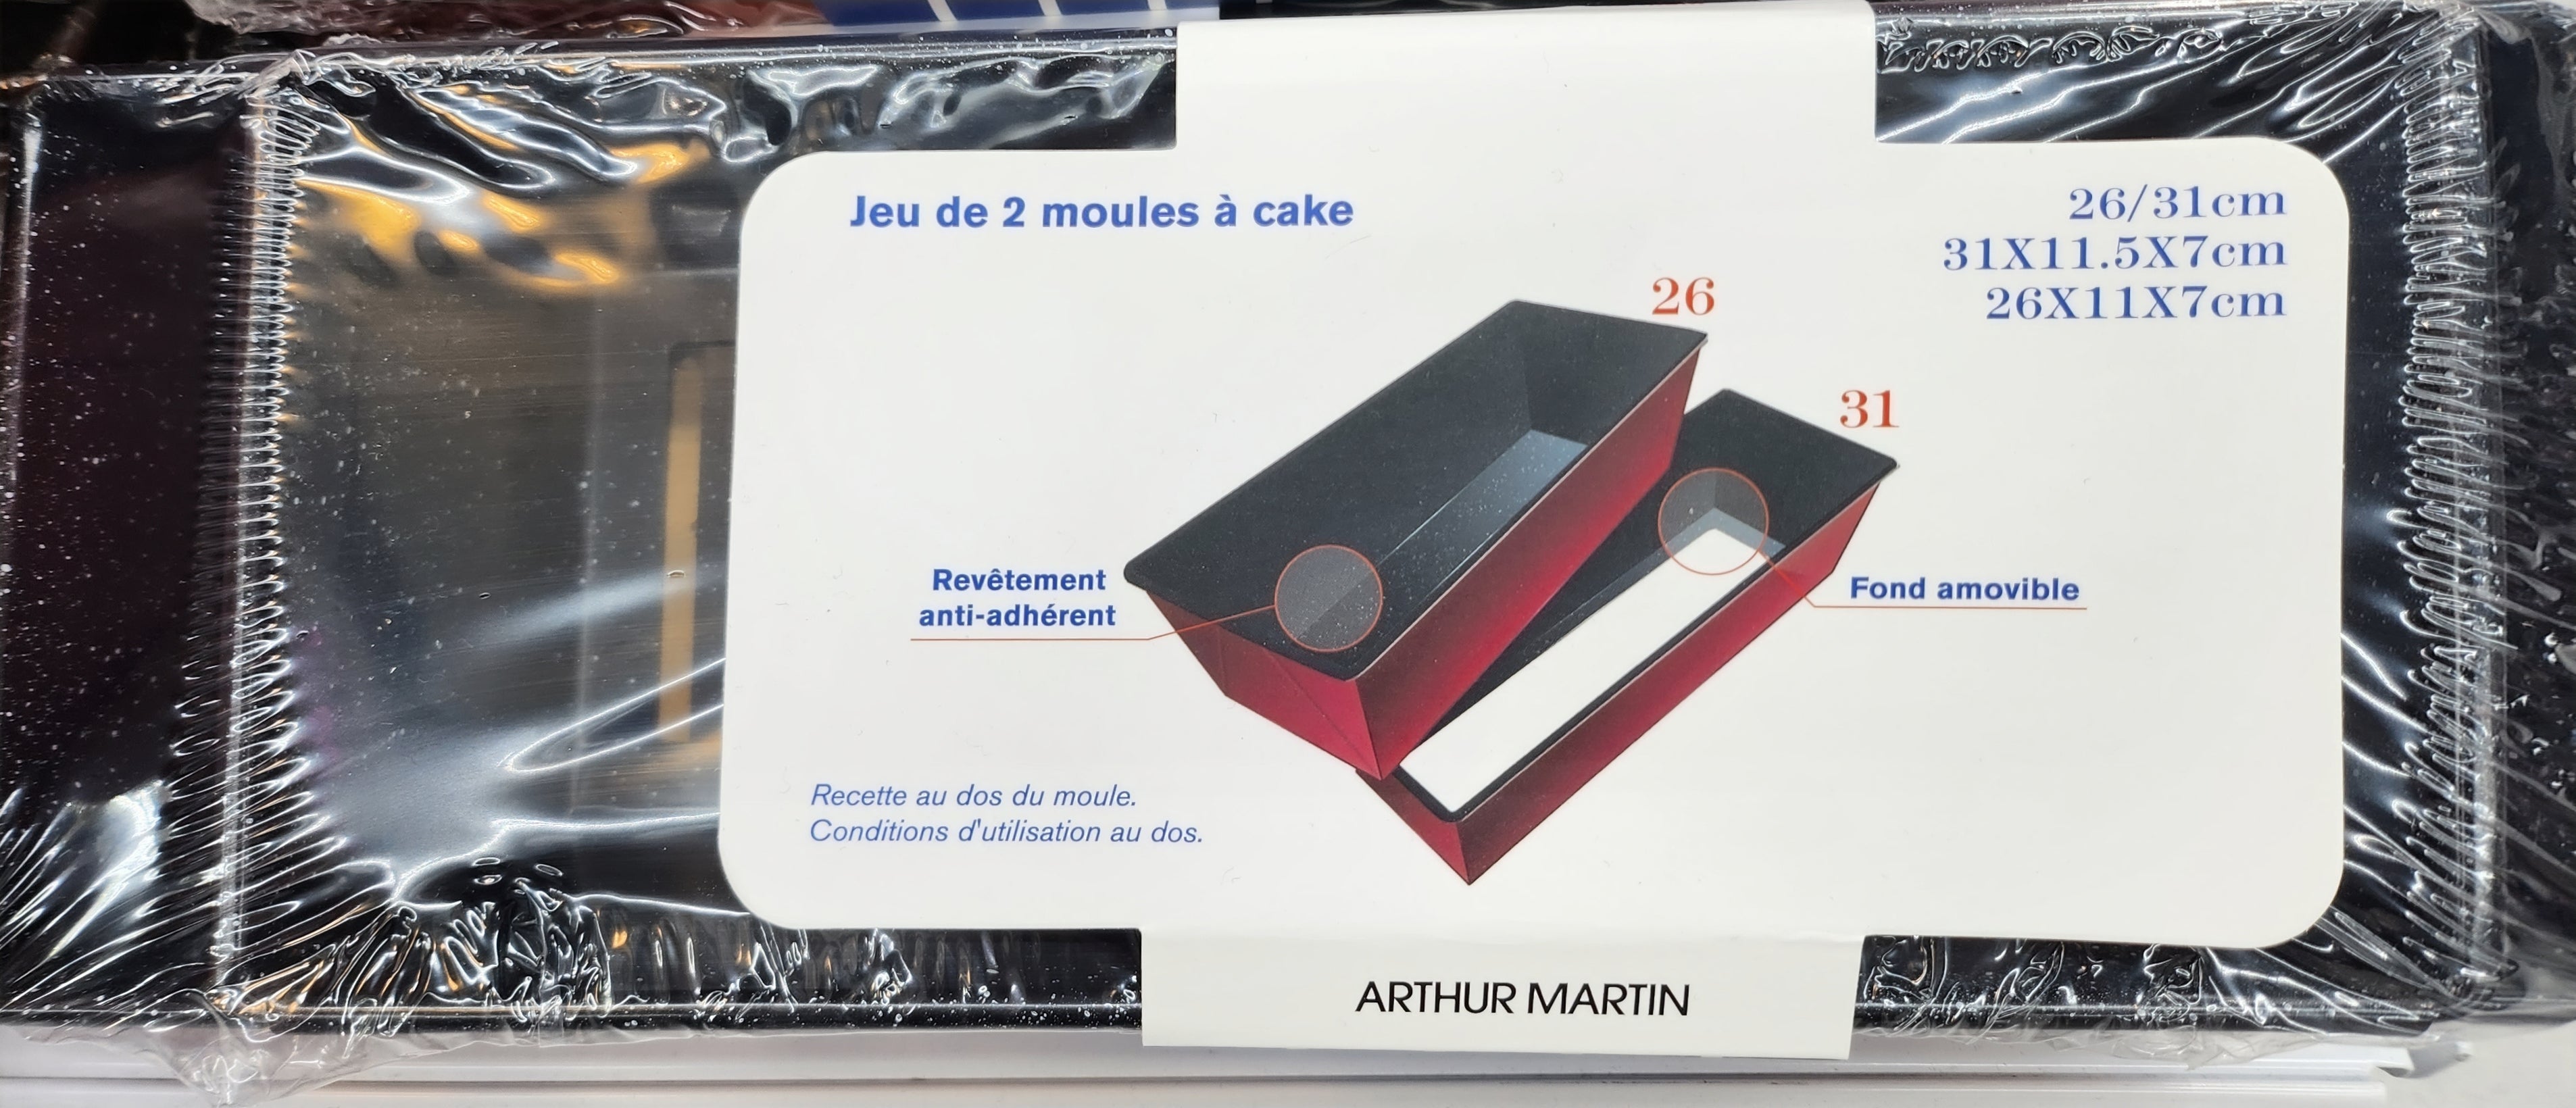 Juego de 2 moldes para tartas Arthur Martin de 26 y 31 cm